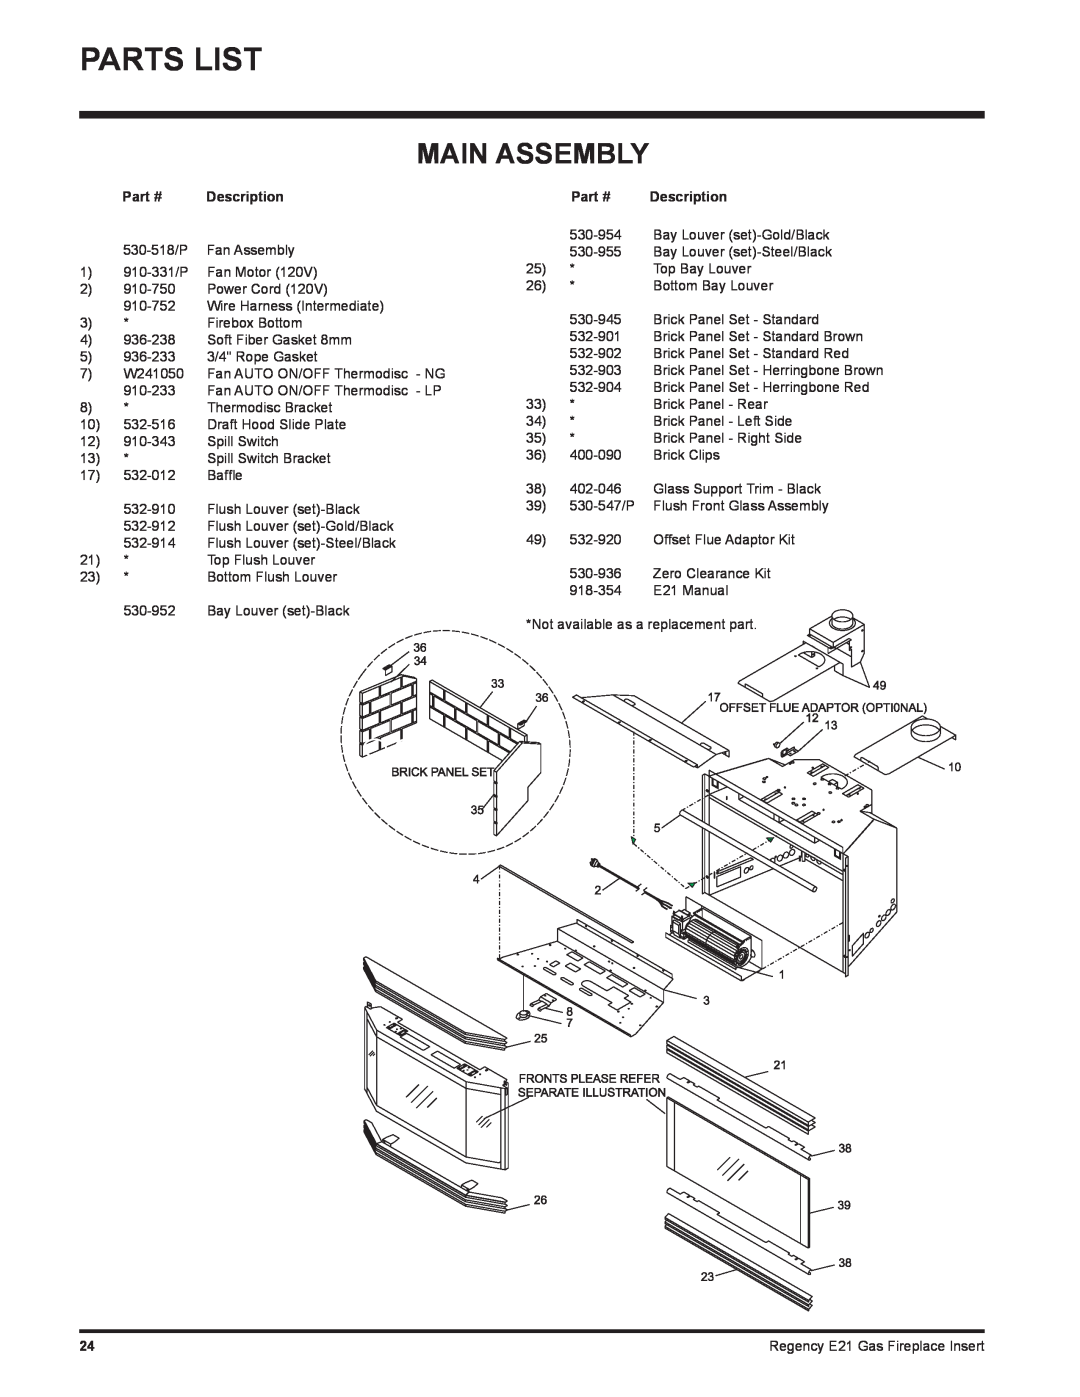 Regency E21-LP1, E21-NG1 installation manual Parts List, Main Assembly, Description 